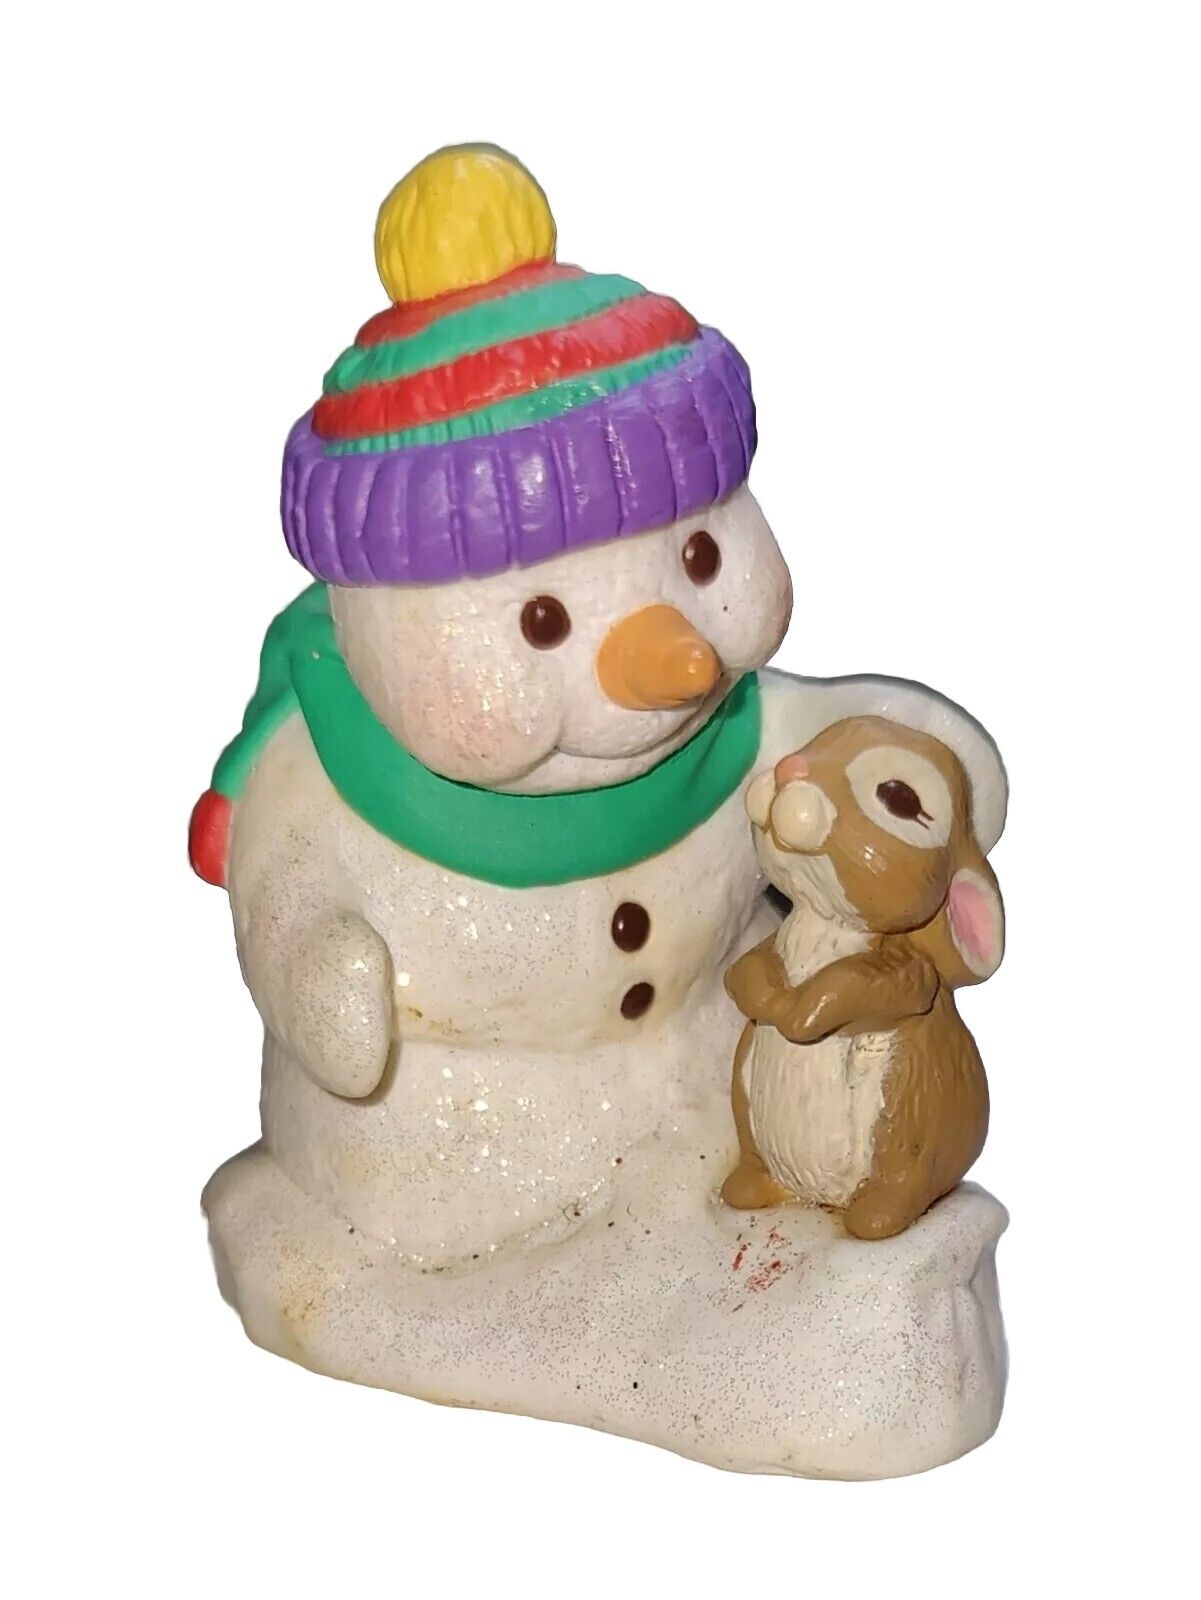 VTG Hallmark Snow Buddies Ornament 1998 Christmas Snowman Bunny No Box